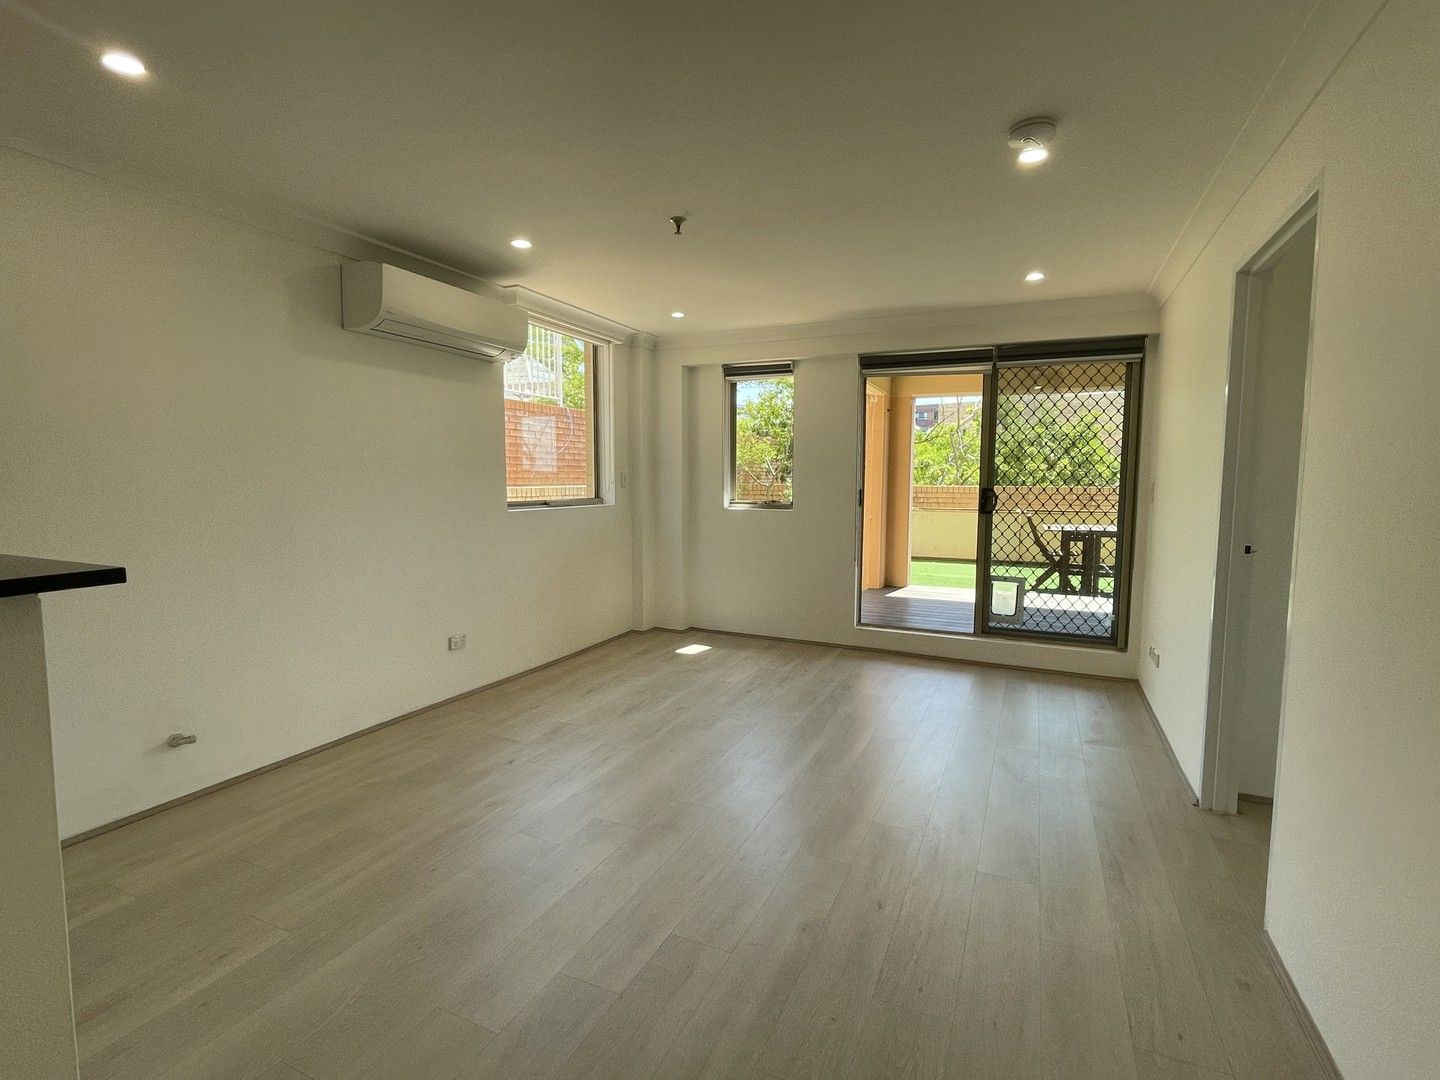 2 bedrooms Apartment / Unit / Flat in 45/17 Macmahon Street HURSTVILLE NSW, 2220